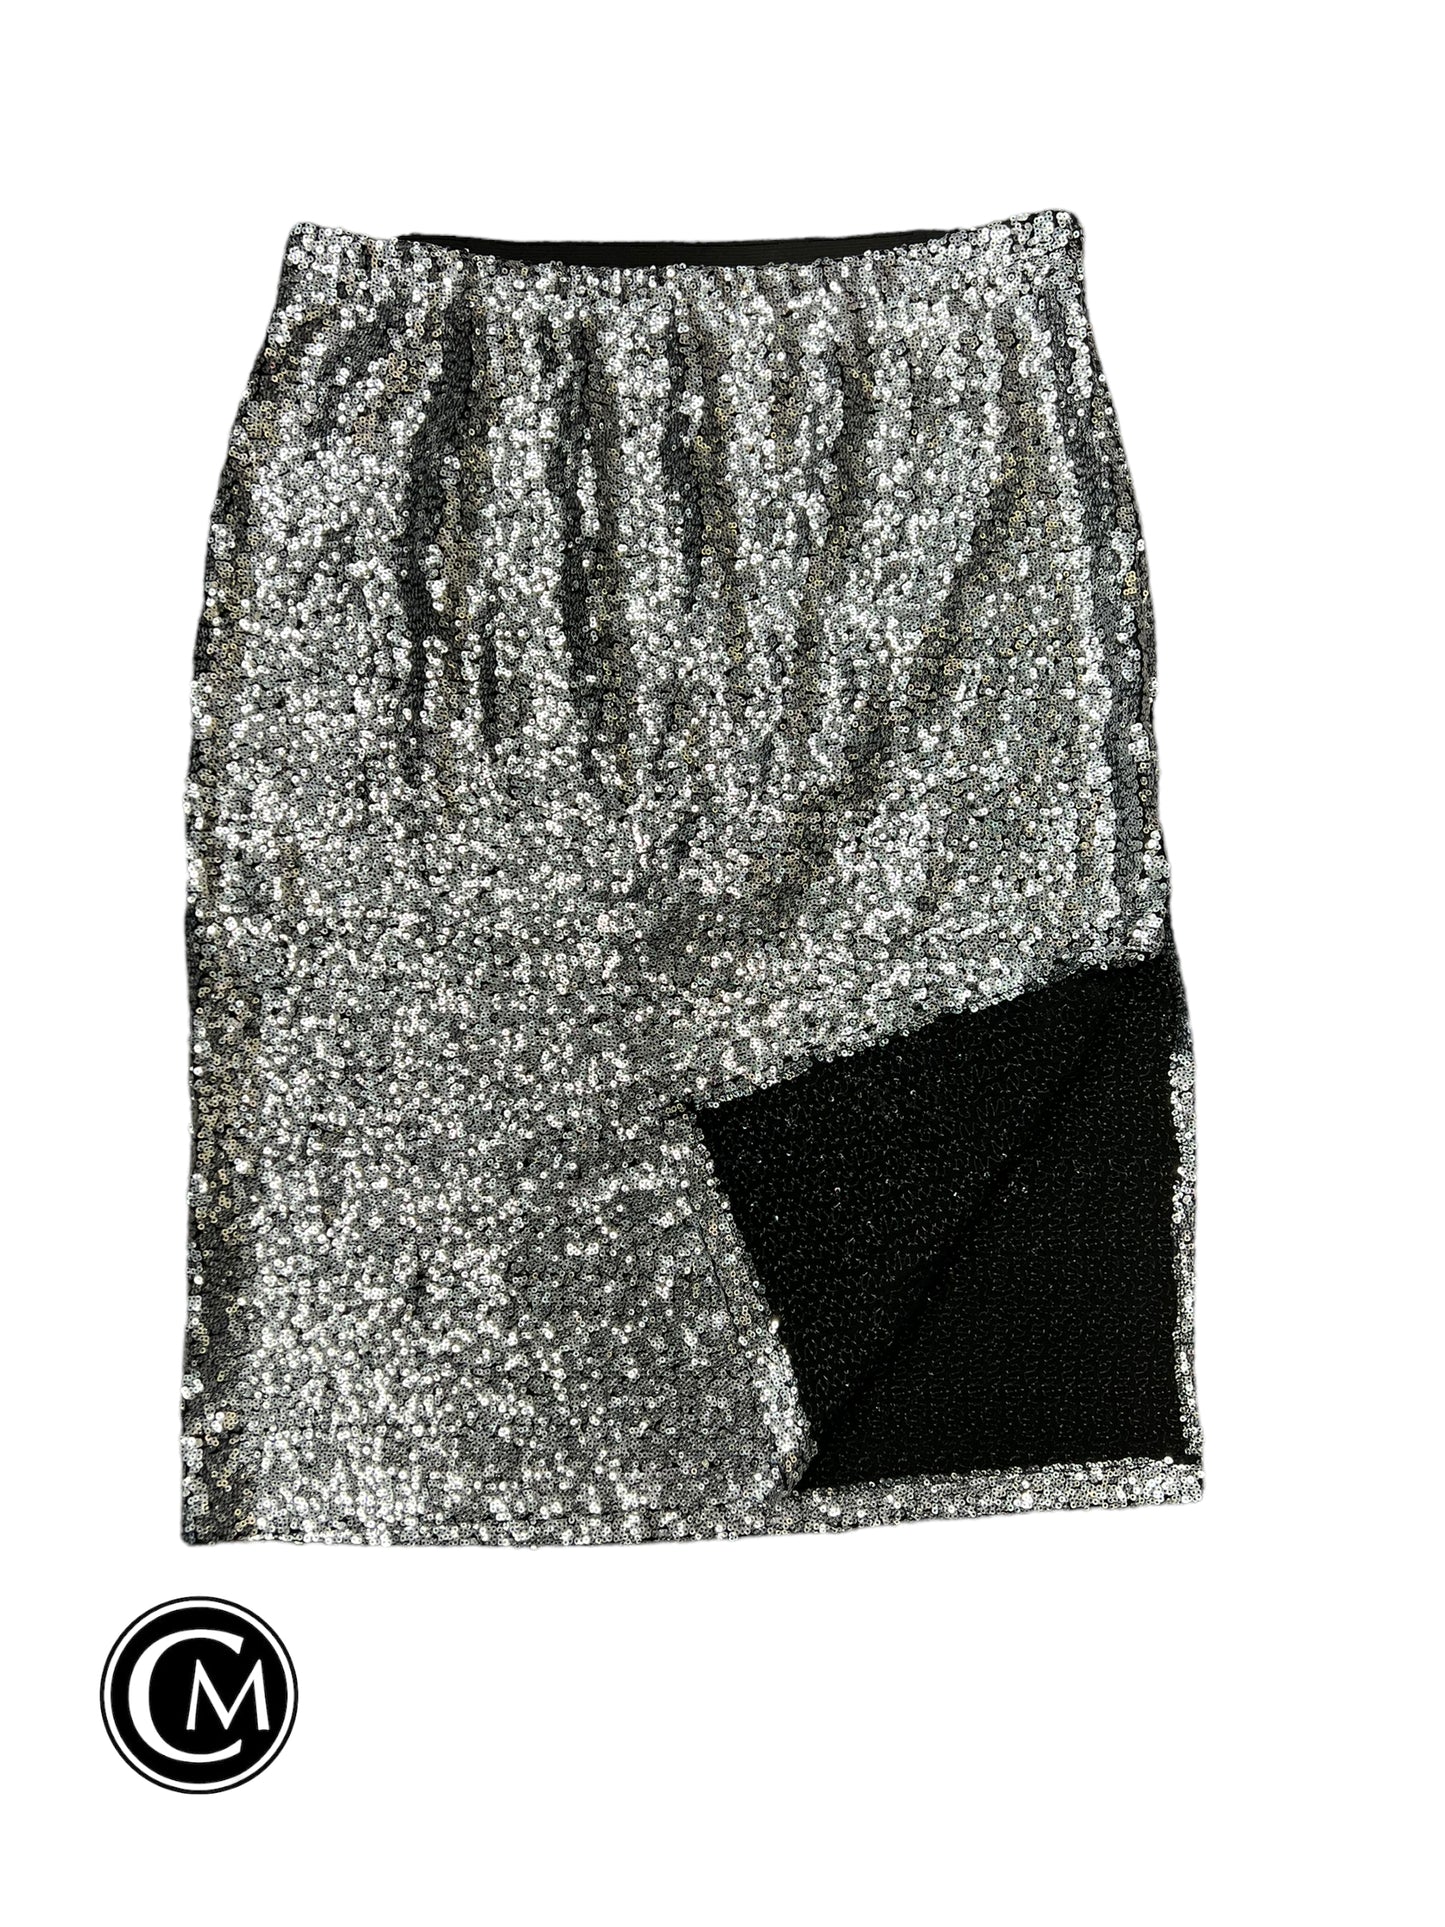 Skirt Midi By Bb Dakota  Size: L